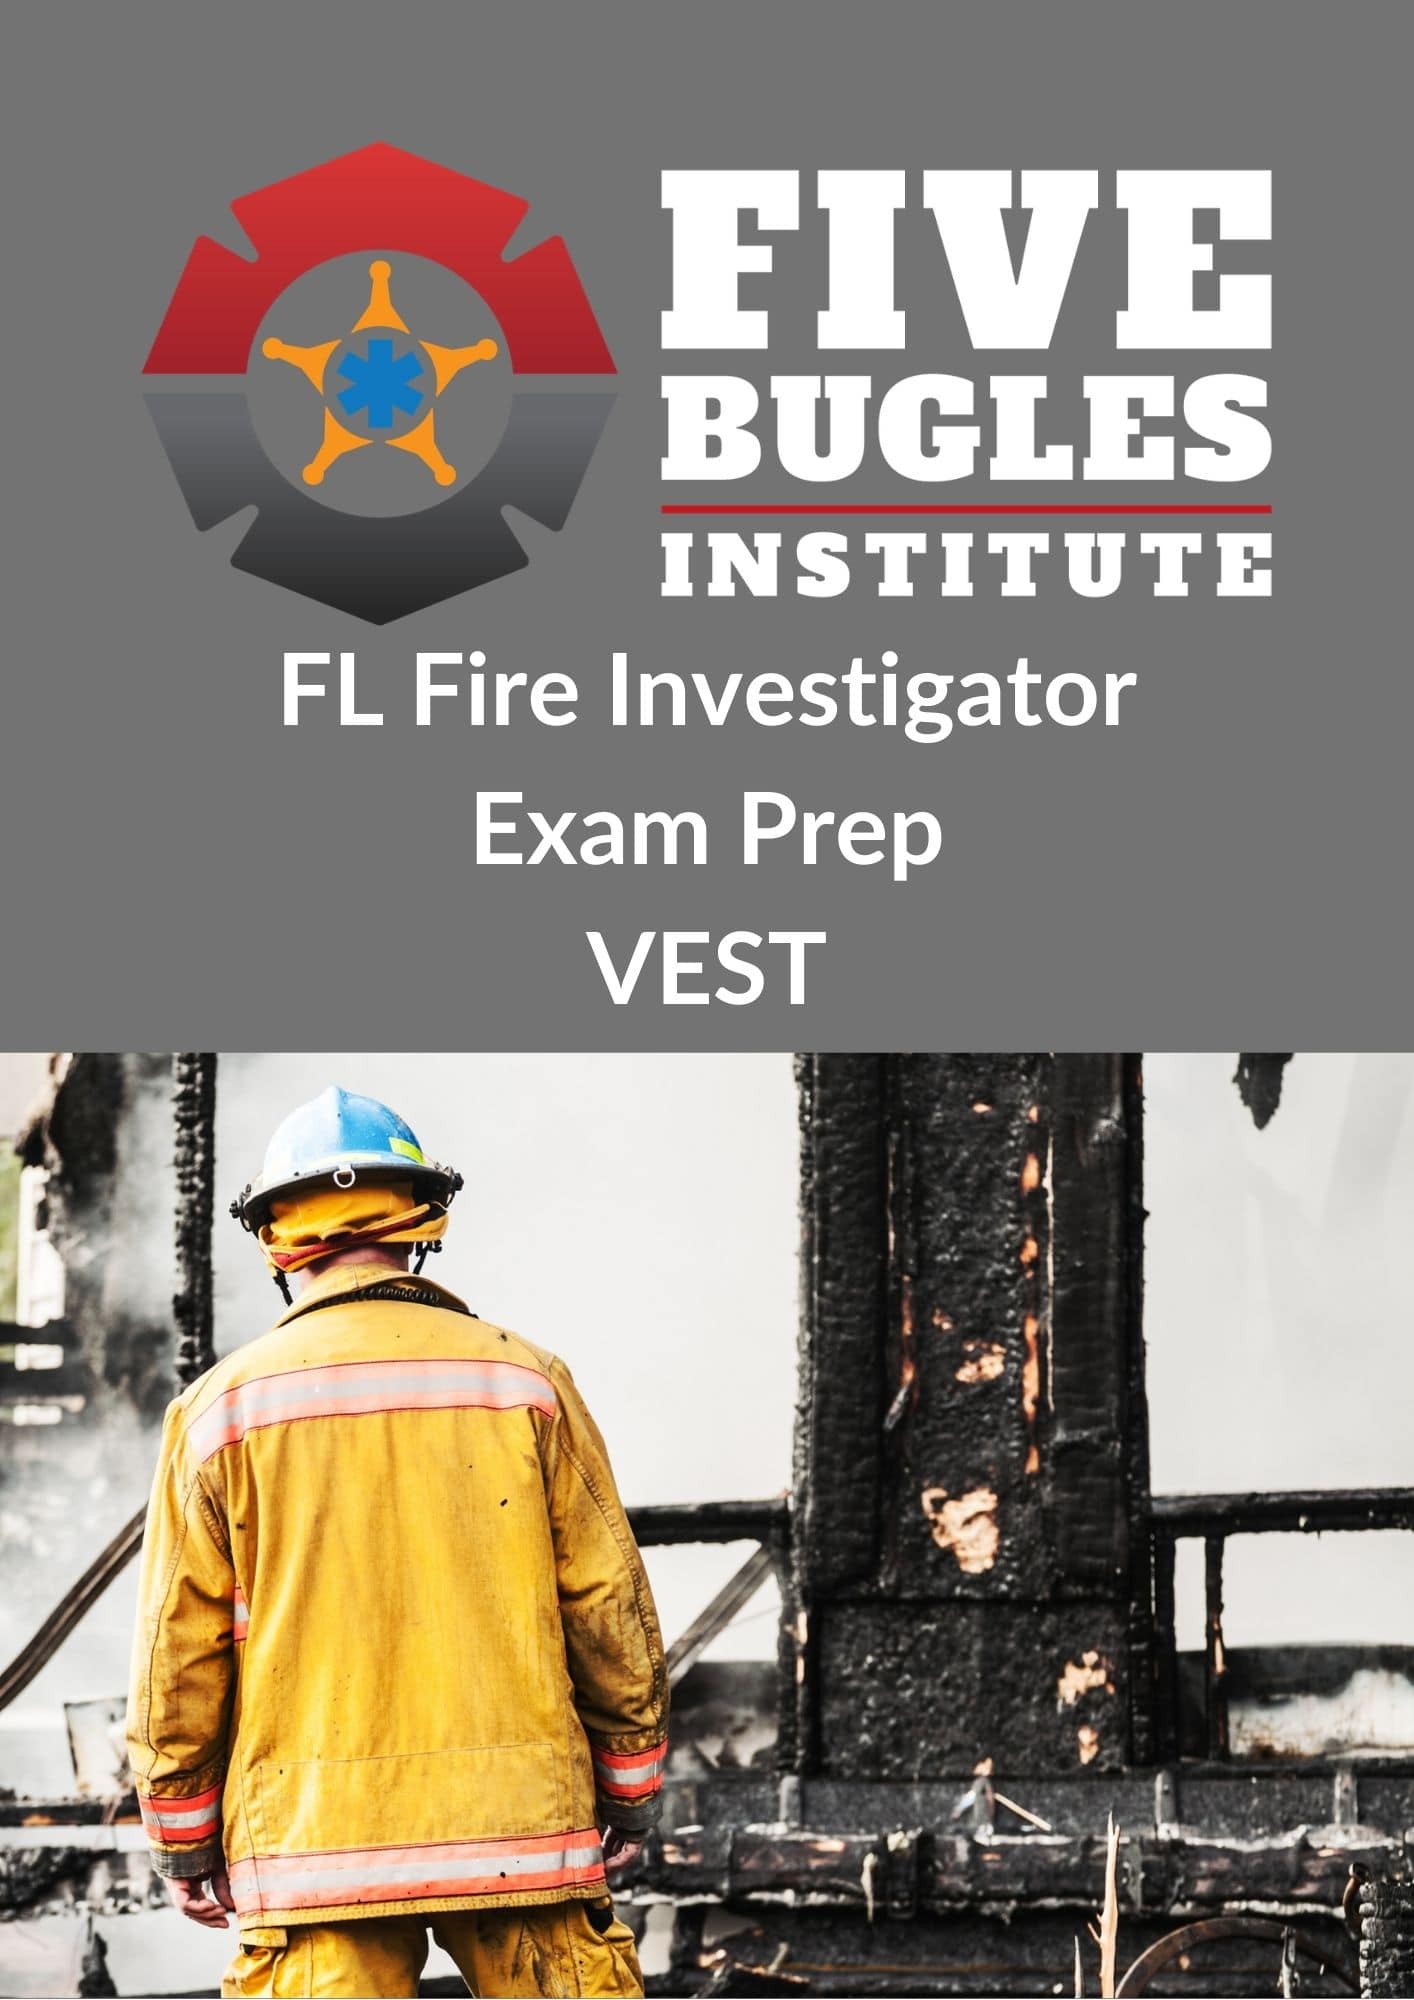 Fire Investigator Exam Prep Five Bugles Institute